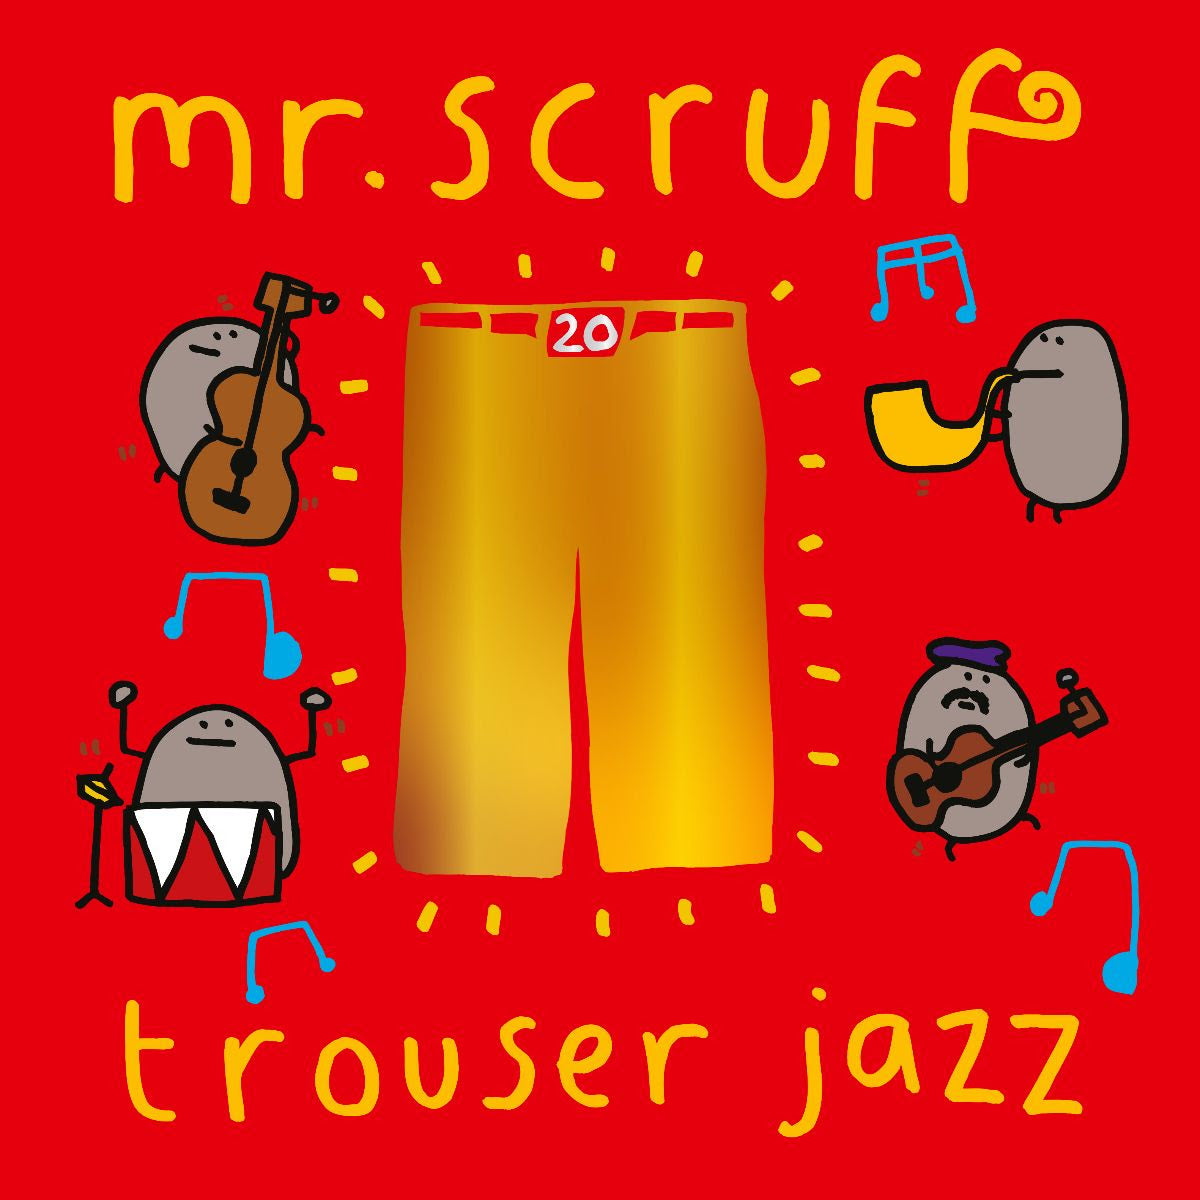 Mr. Scruff - Trouser Jazz | Buy the Vinyl LP from Flying Nun Records 